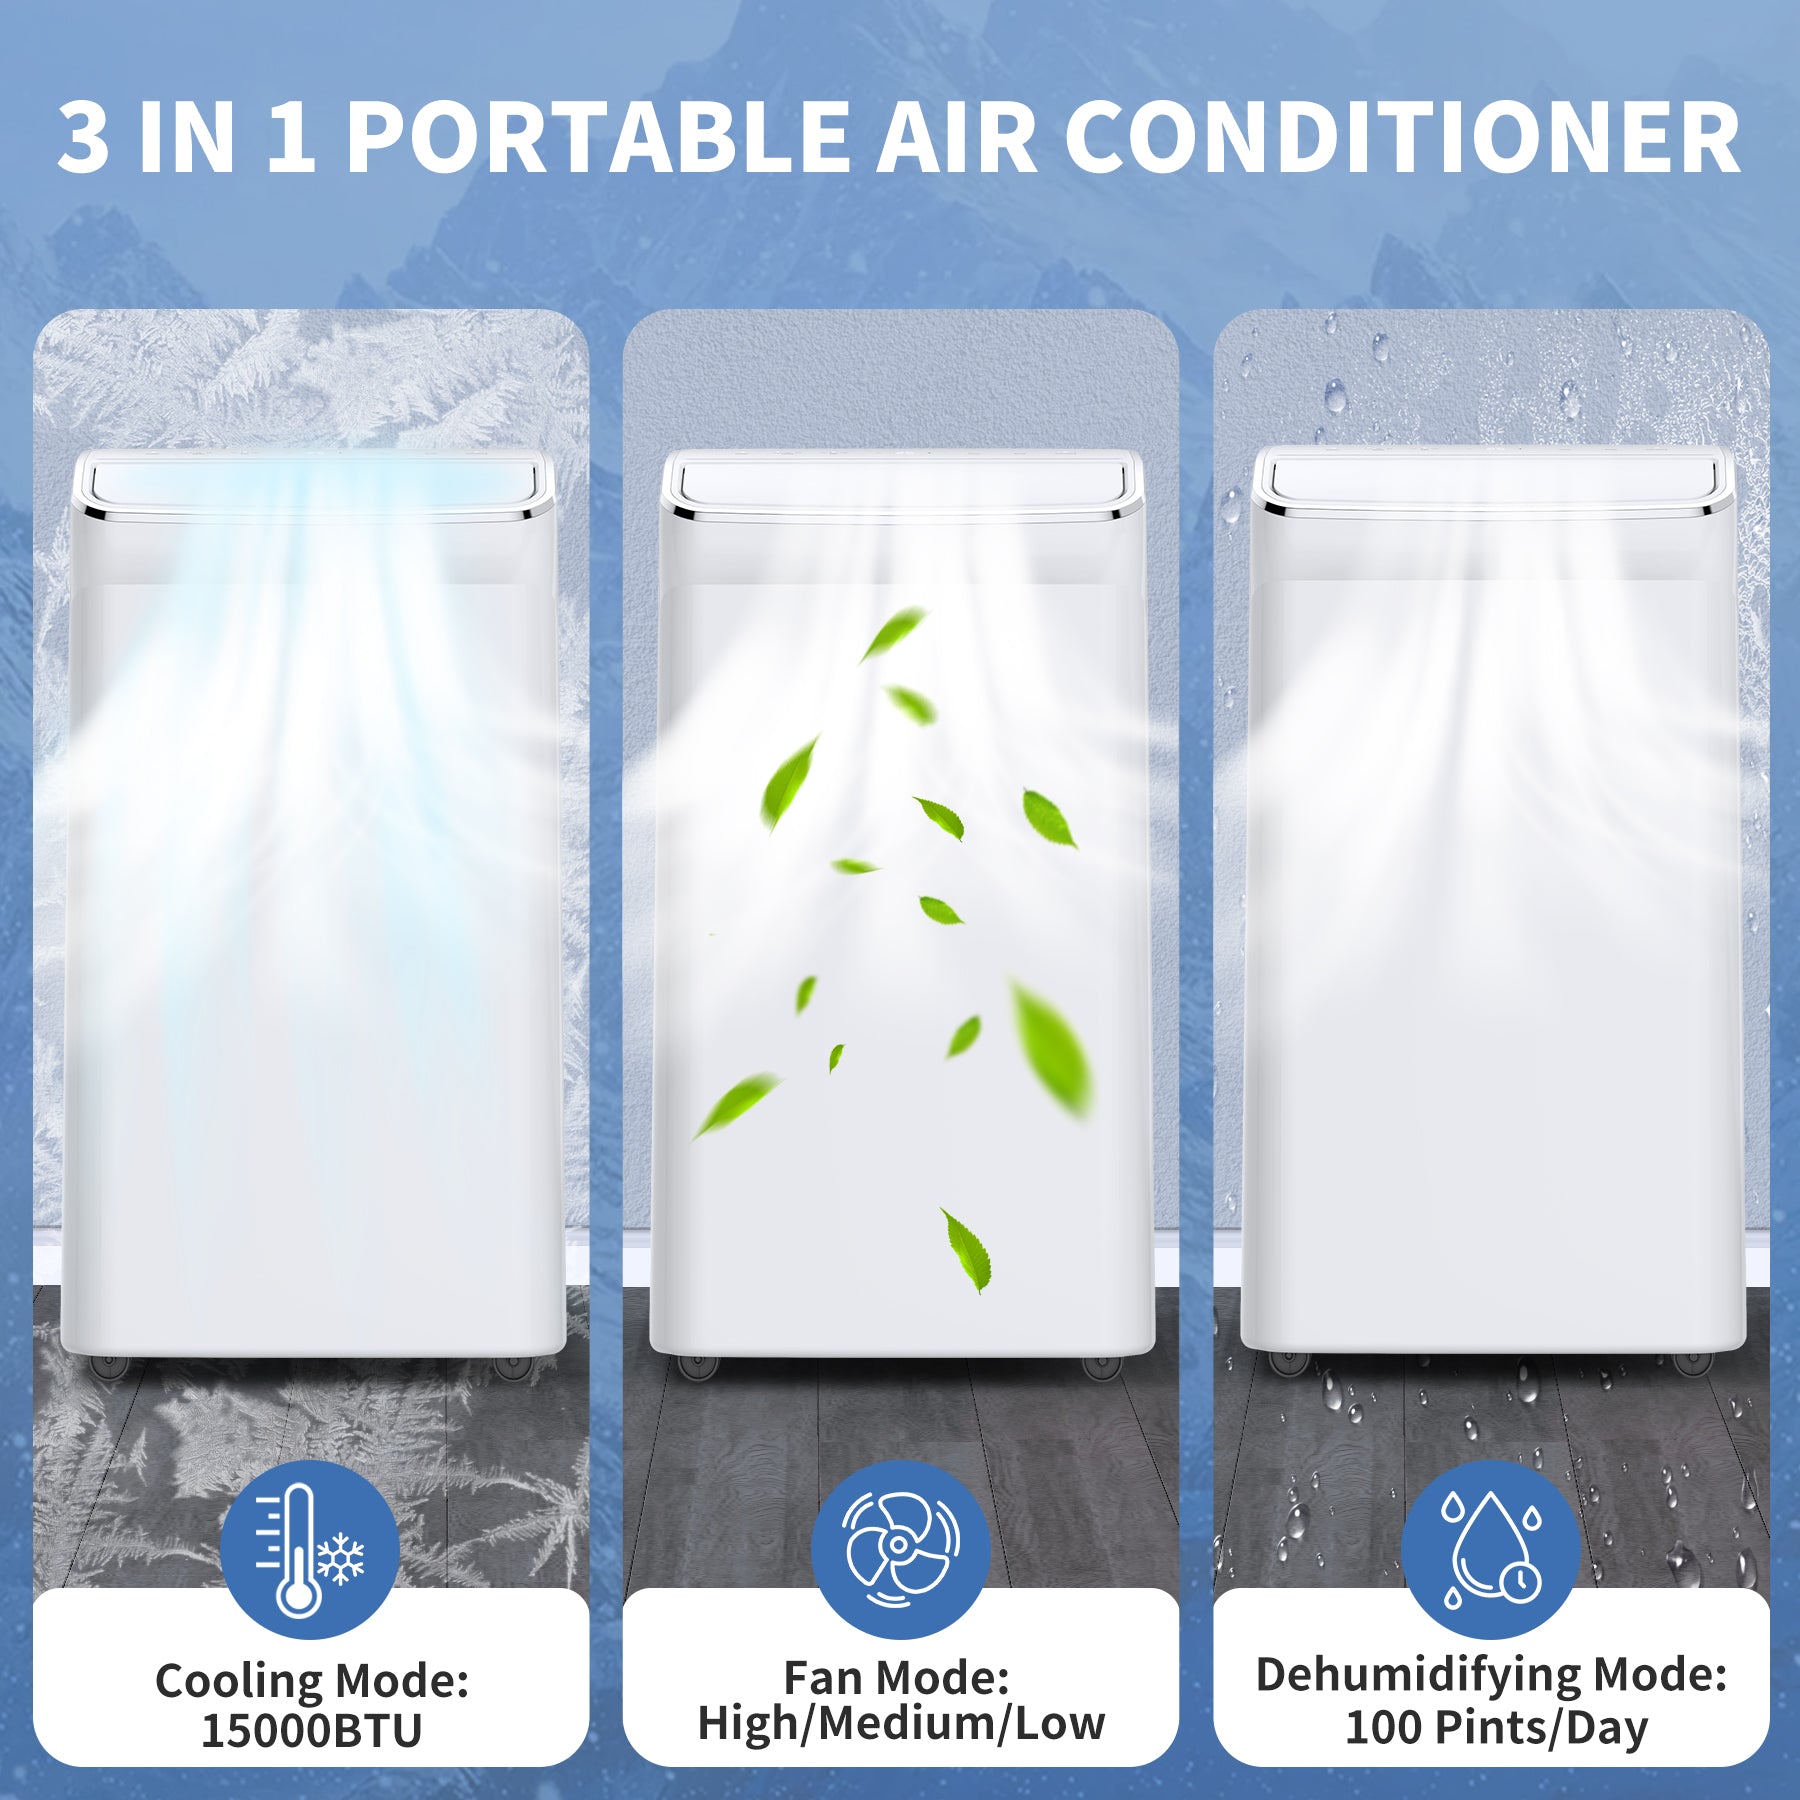 15,000 BTU Portable Air Conditioner, White